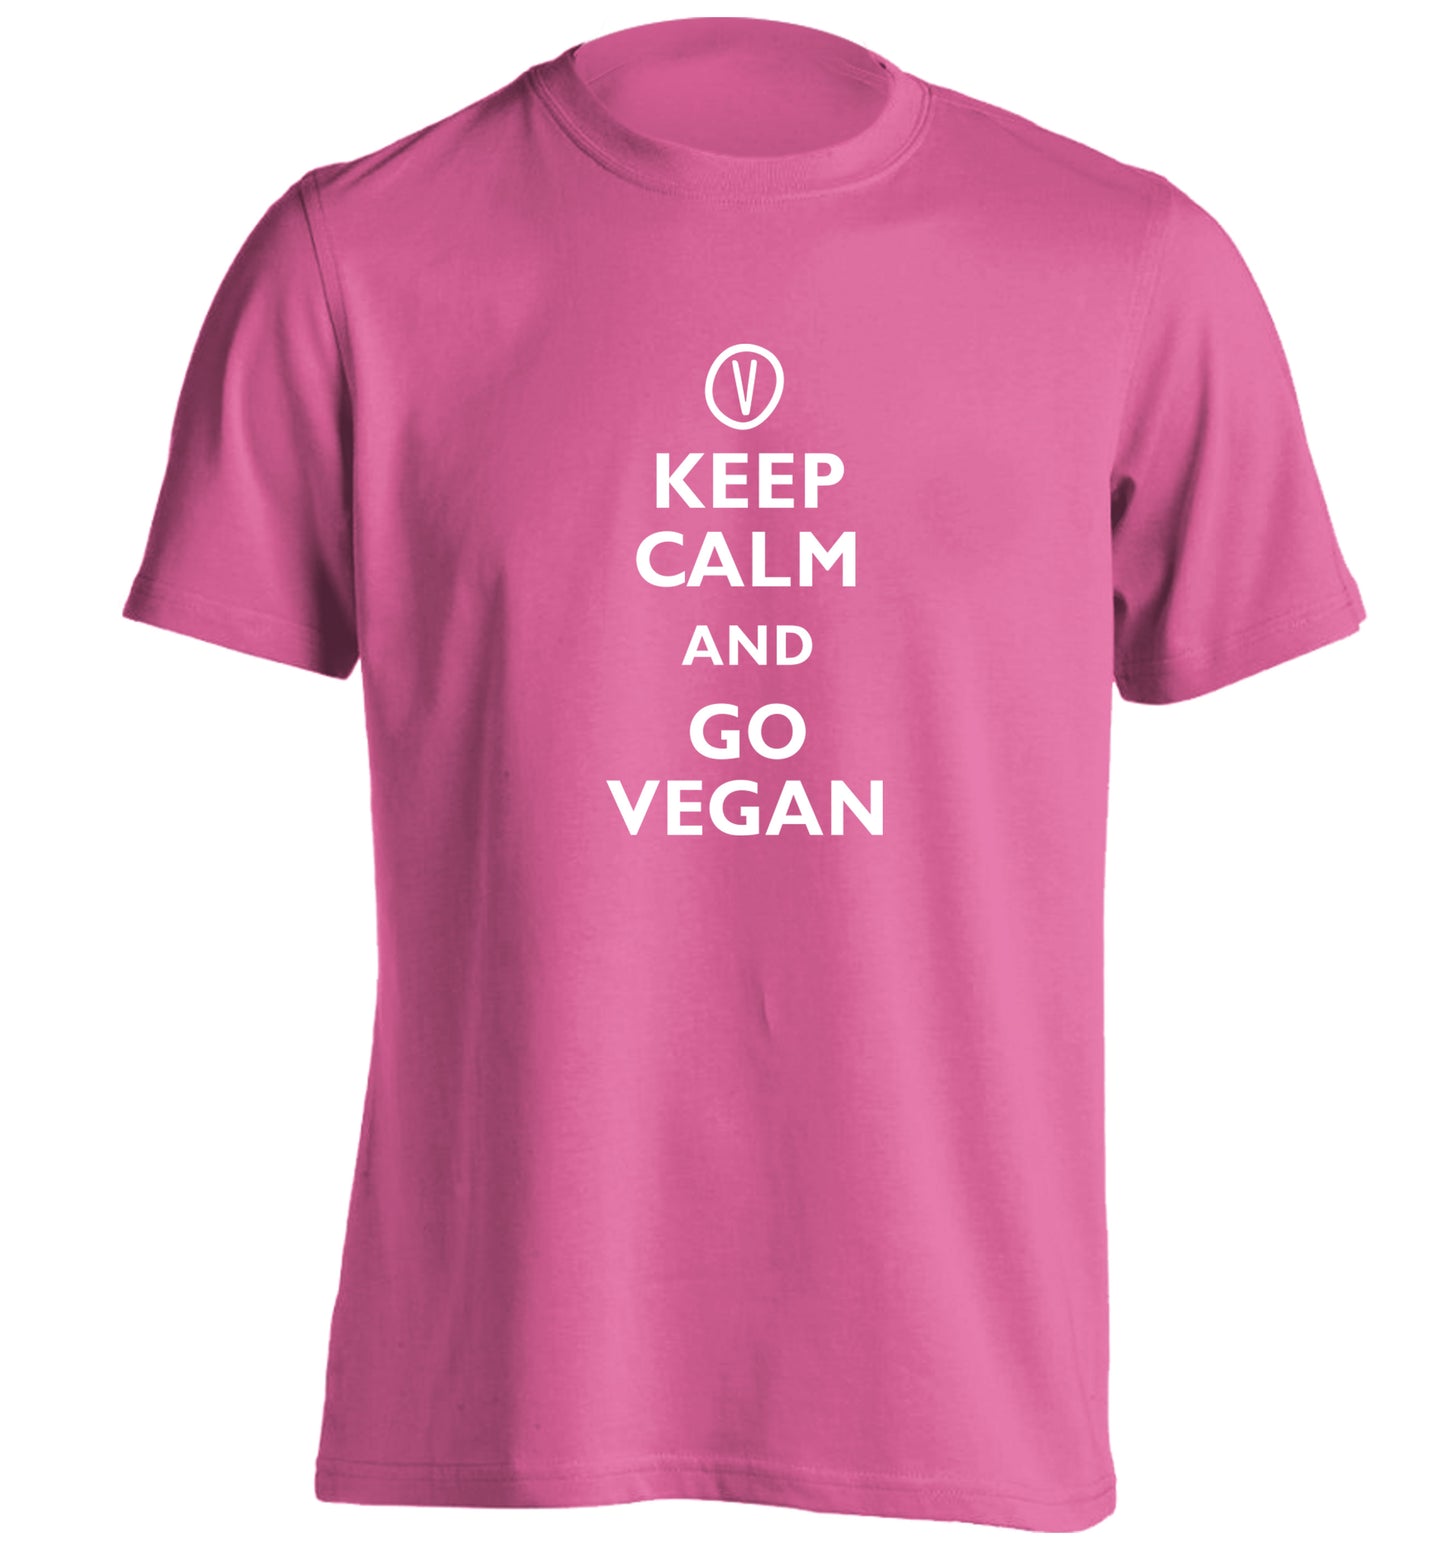 Keep calm and go vegan adults unisex pink Tshirt 2XL